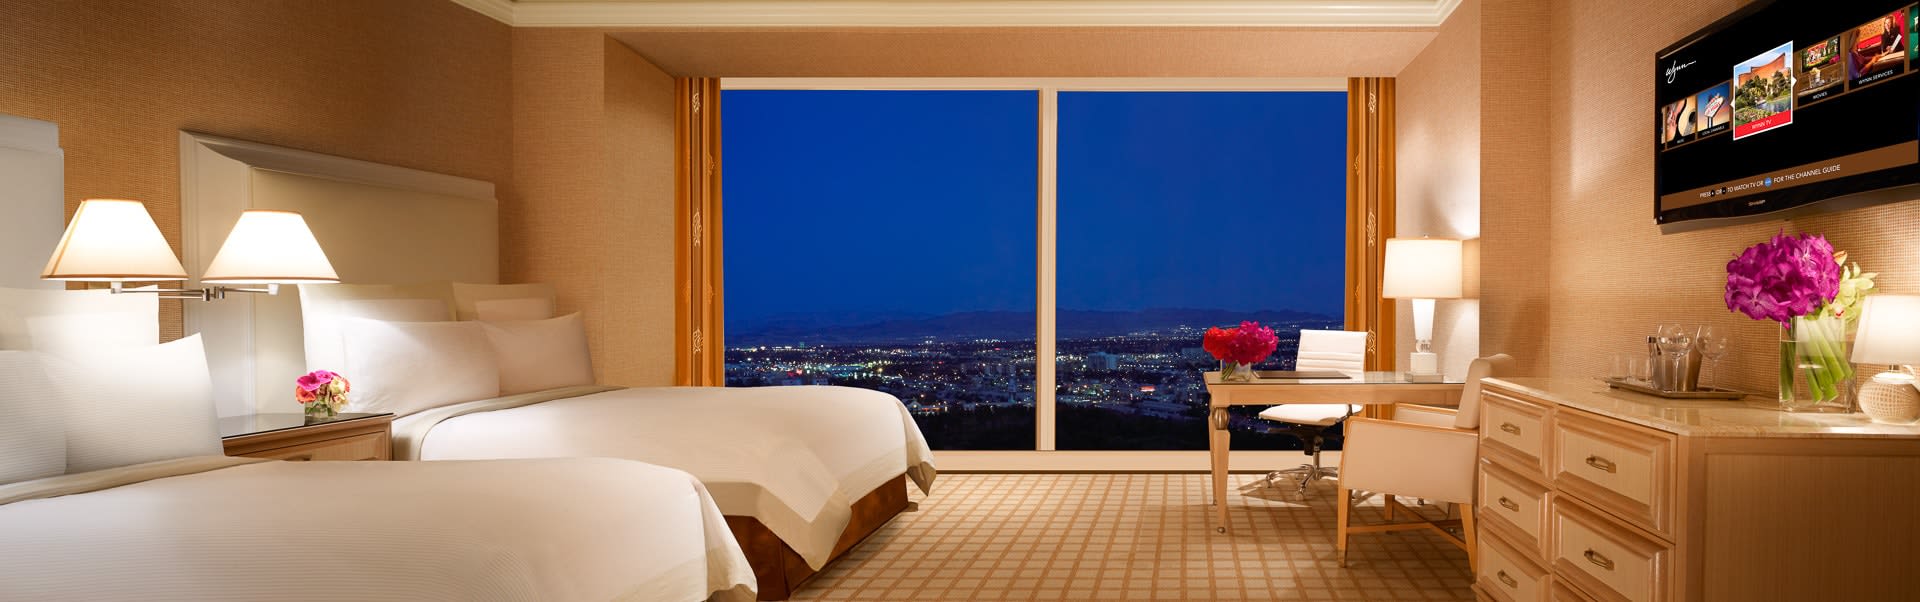 Wynn Tower Suite Two Double Luxury Hotel Suites Wynn Las Vegas